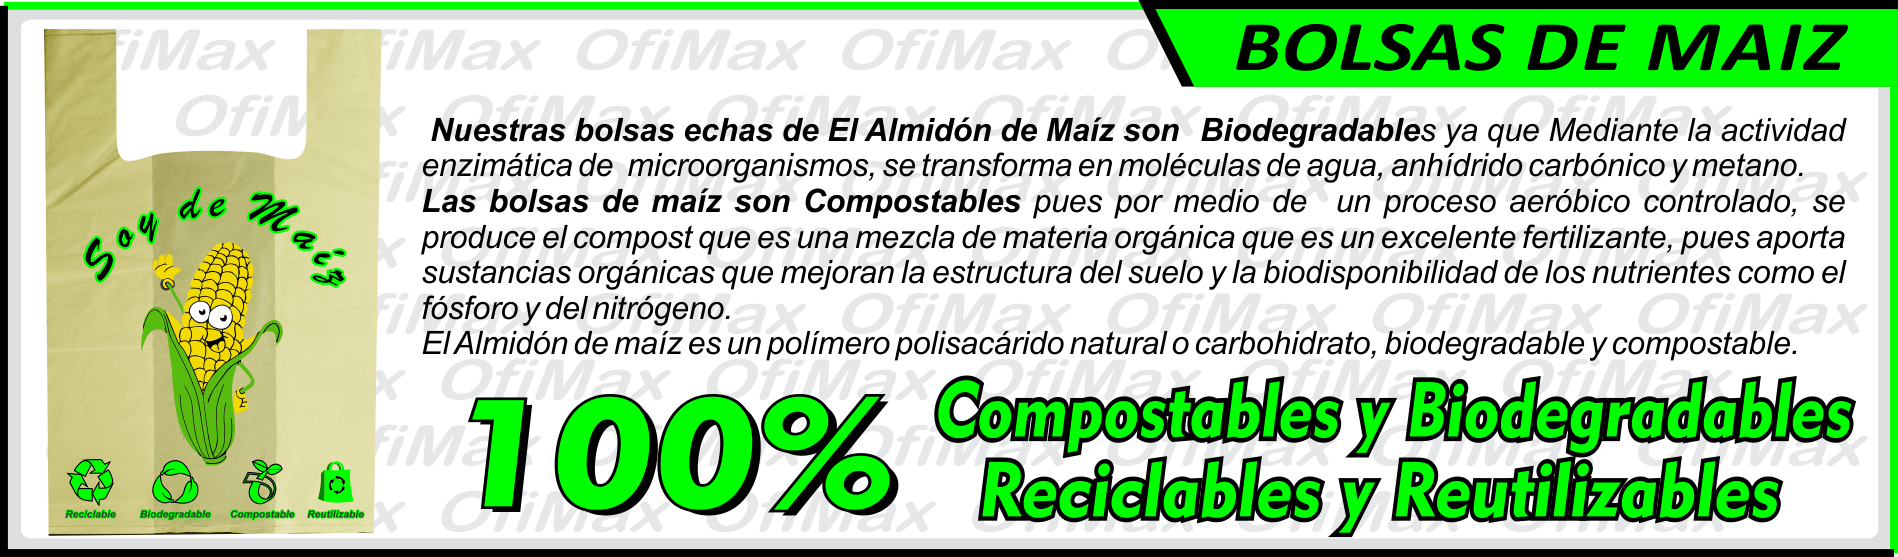 bolsas ecologicas vegetales compostables de maiz caracteristicas, colombia